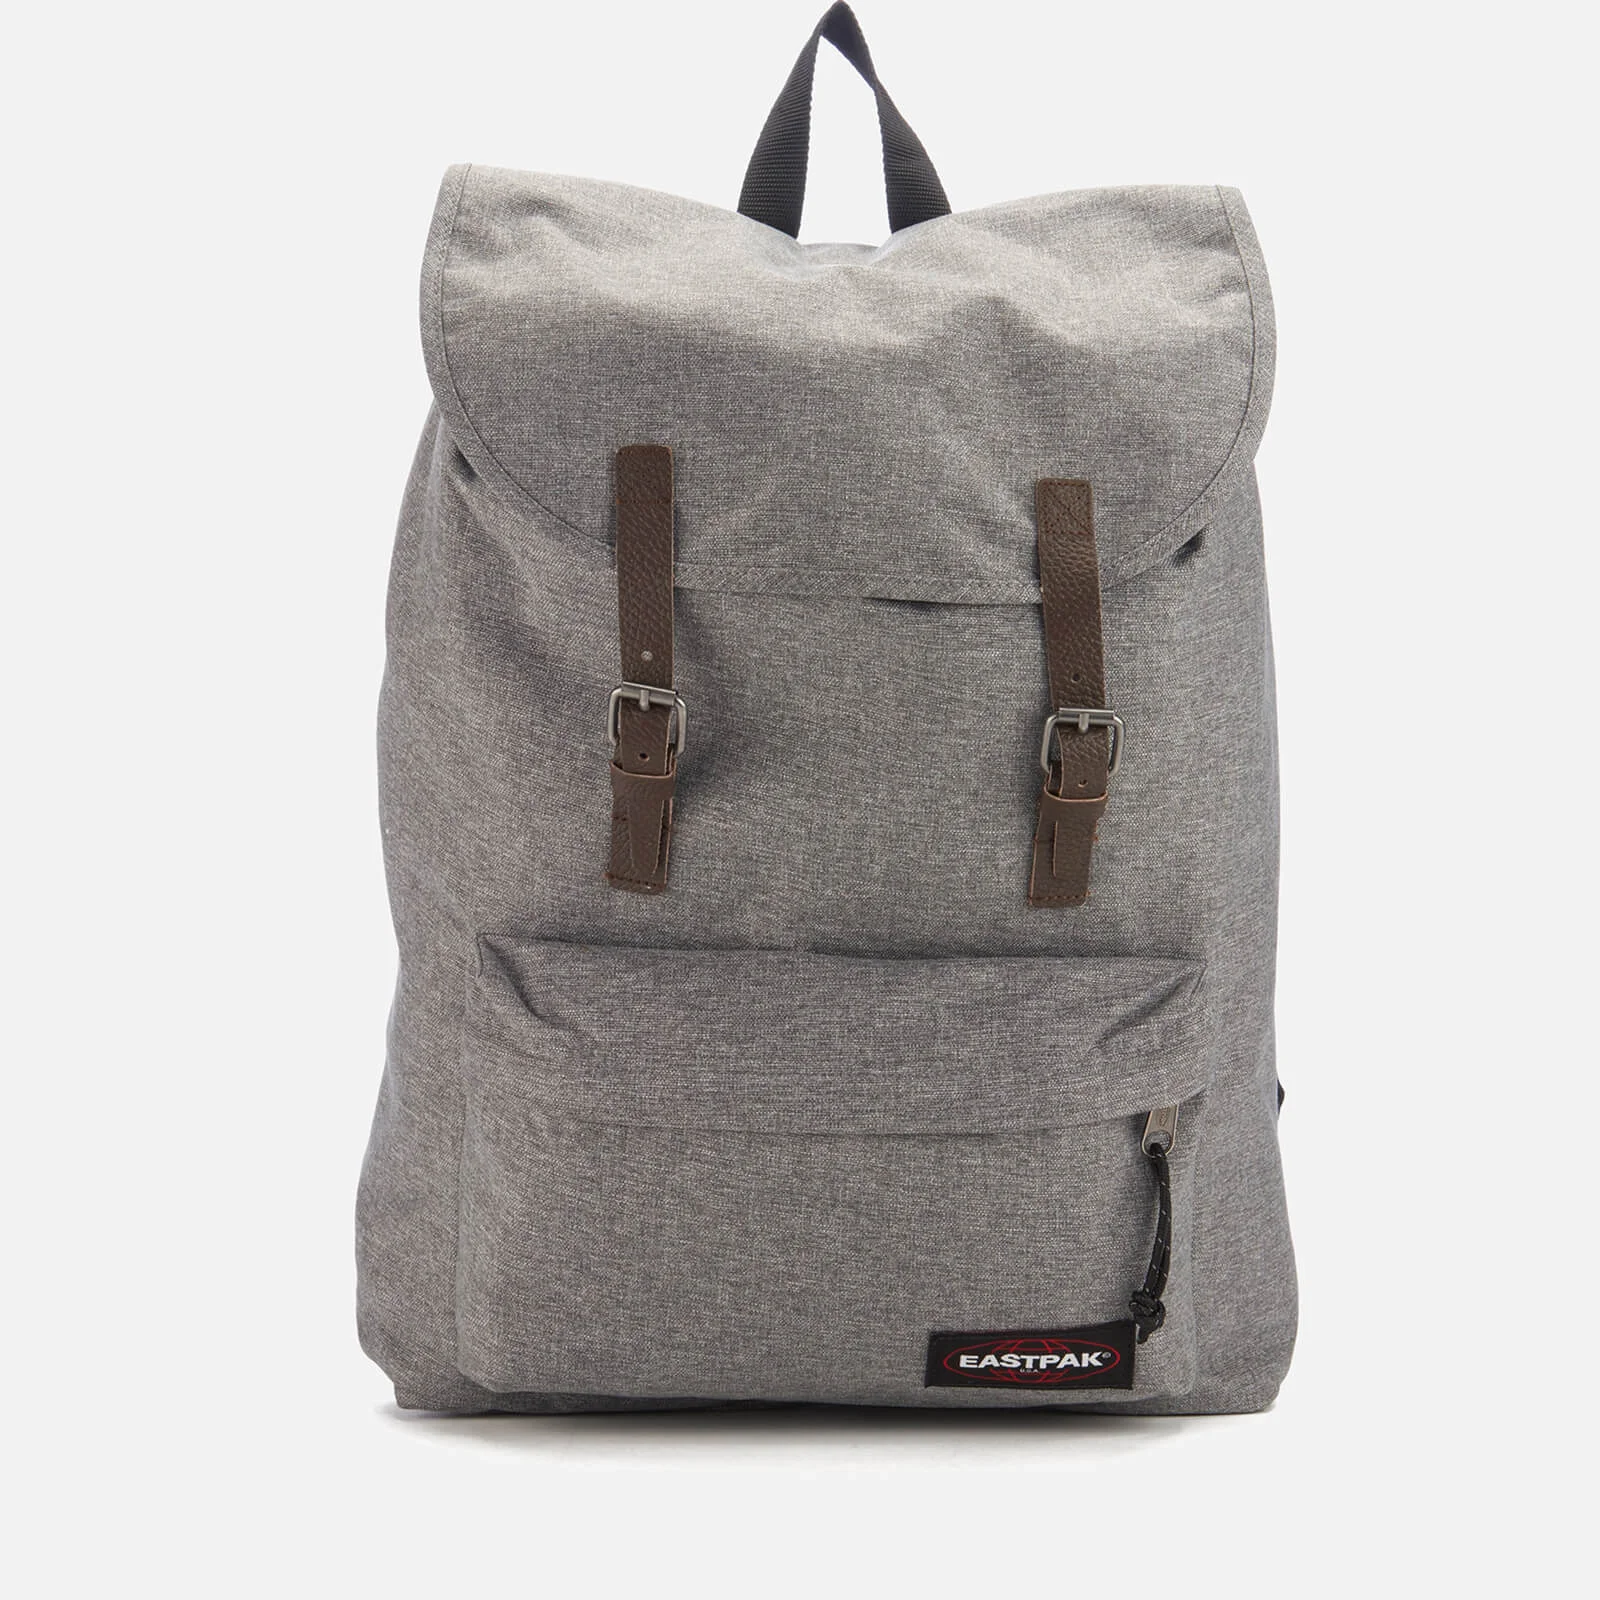 Eastpak Men's London Backpack - Stone Grey Image 1